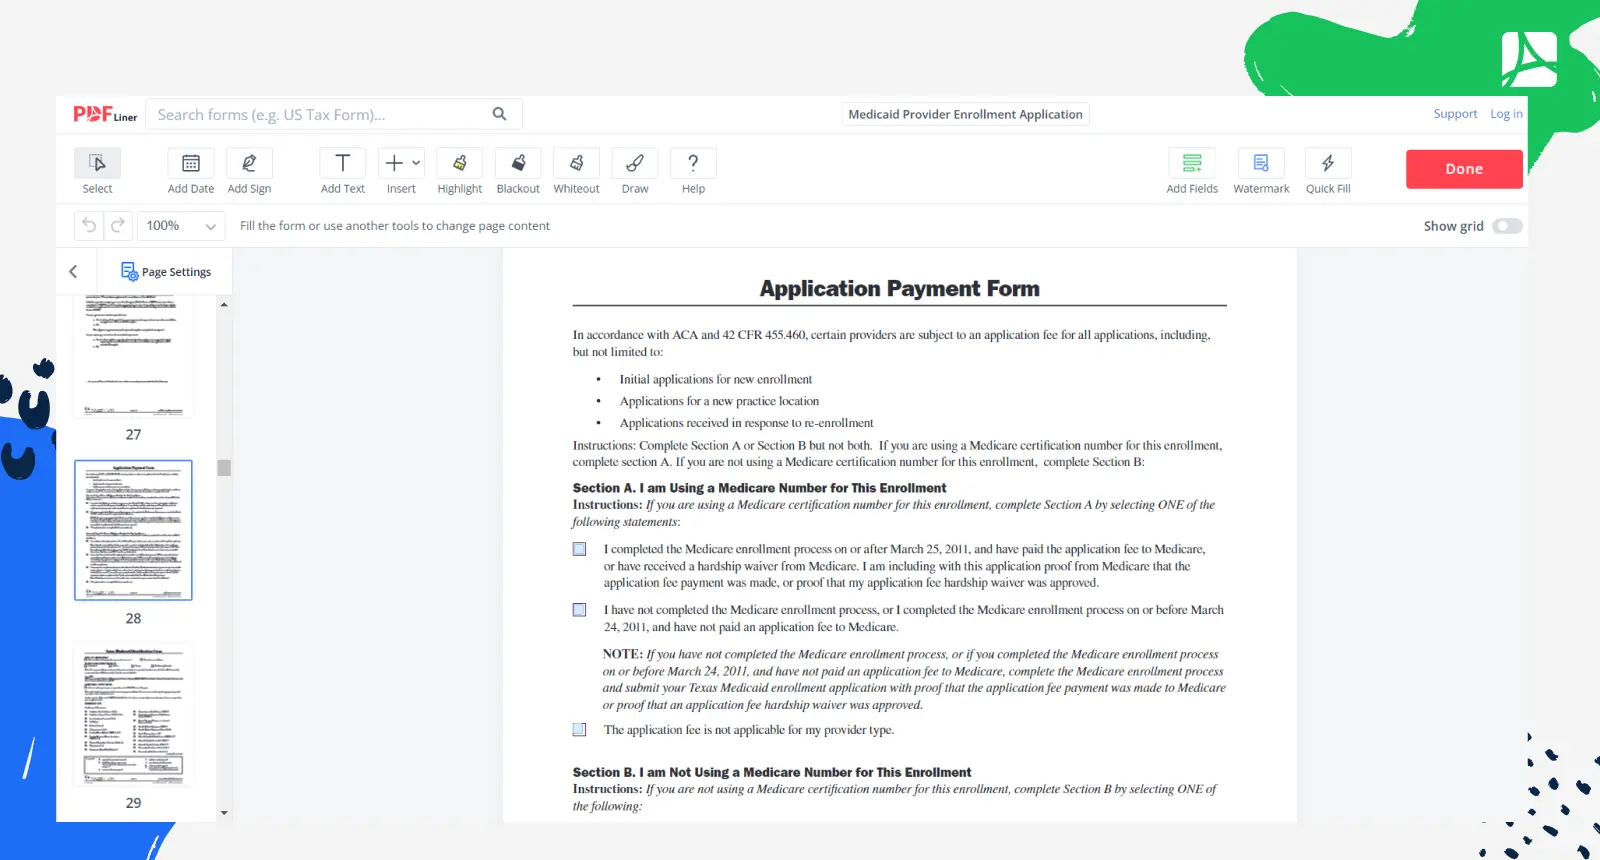 Medicaid Provider Enrollment Application Form Screenshot